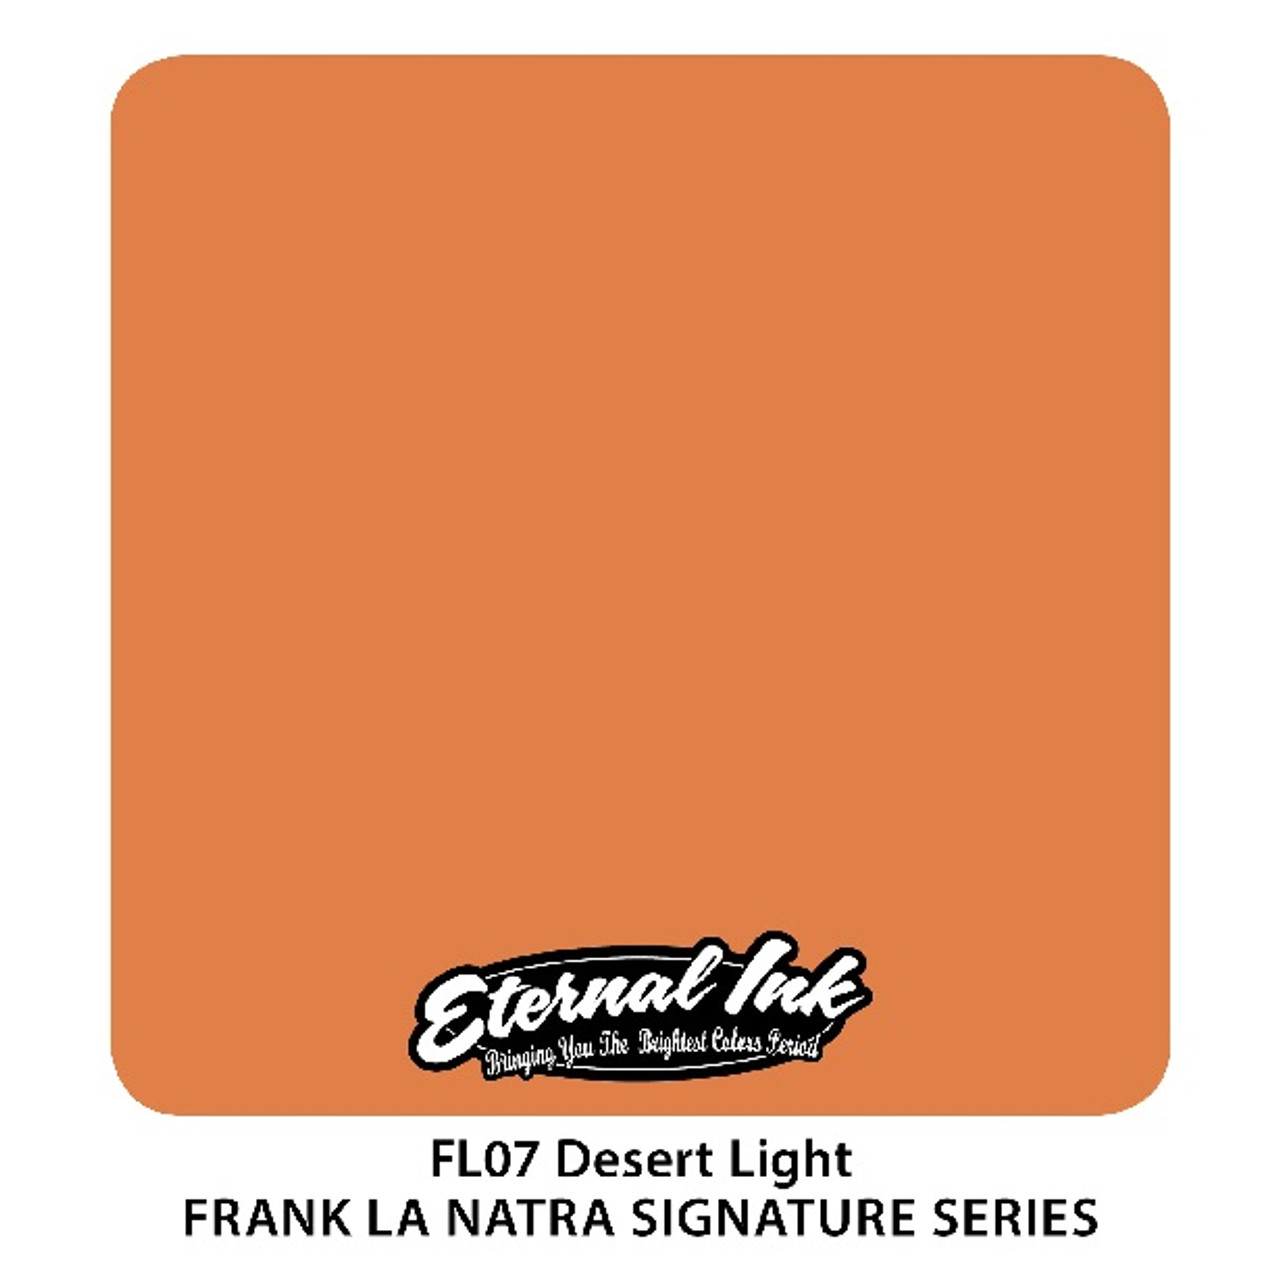 Frank La Natra Desert Light, 1oz.